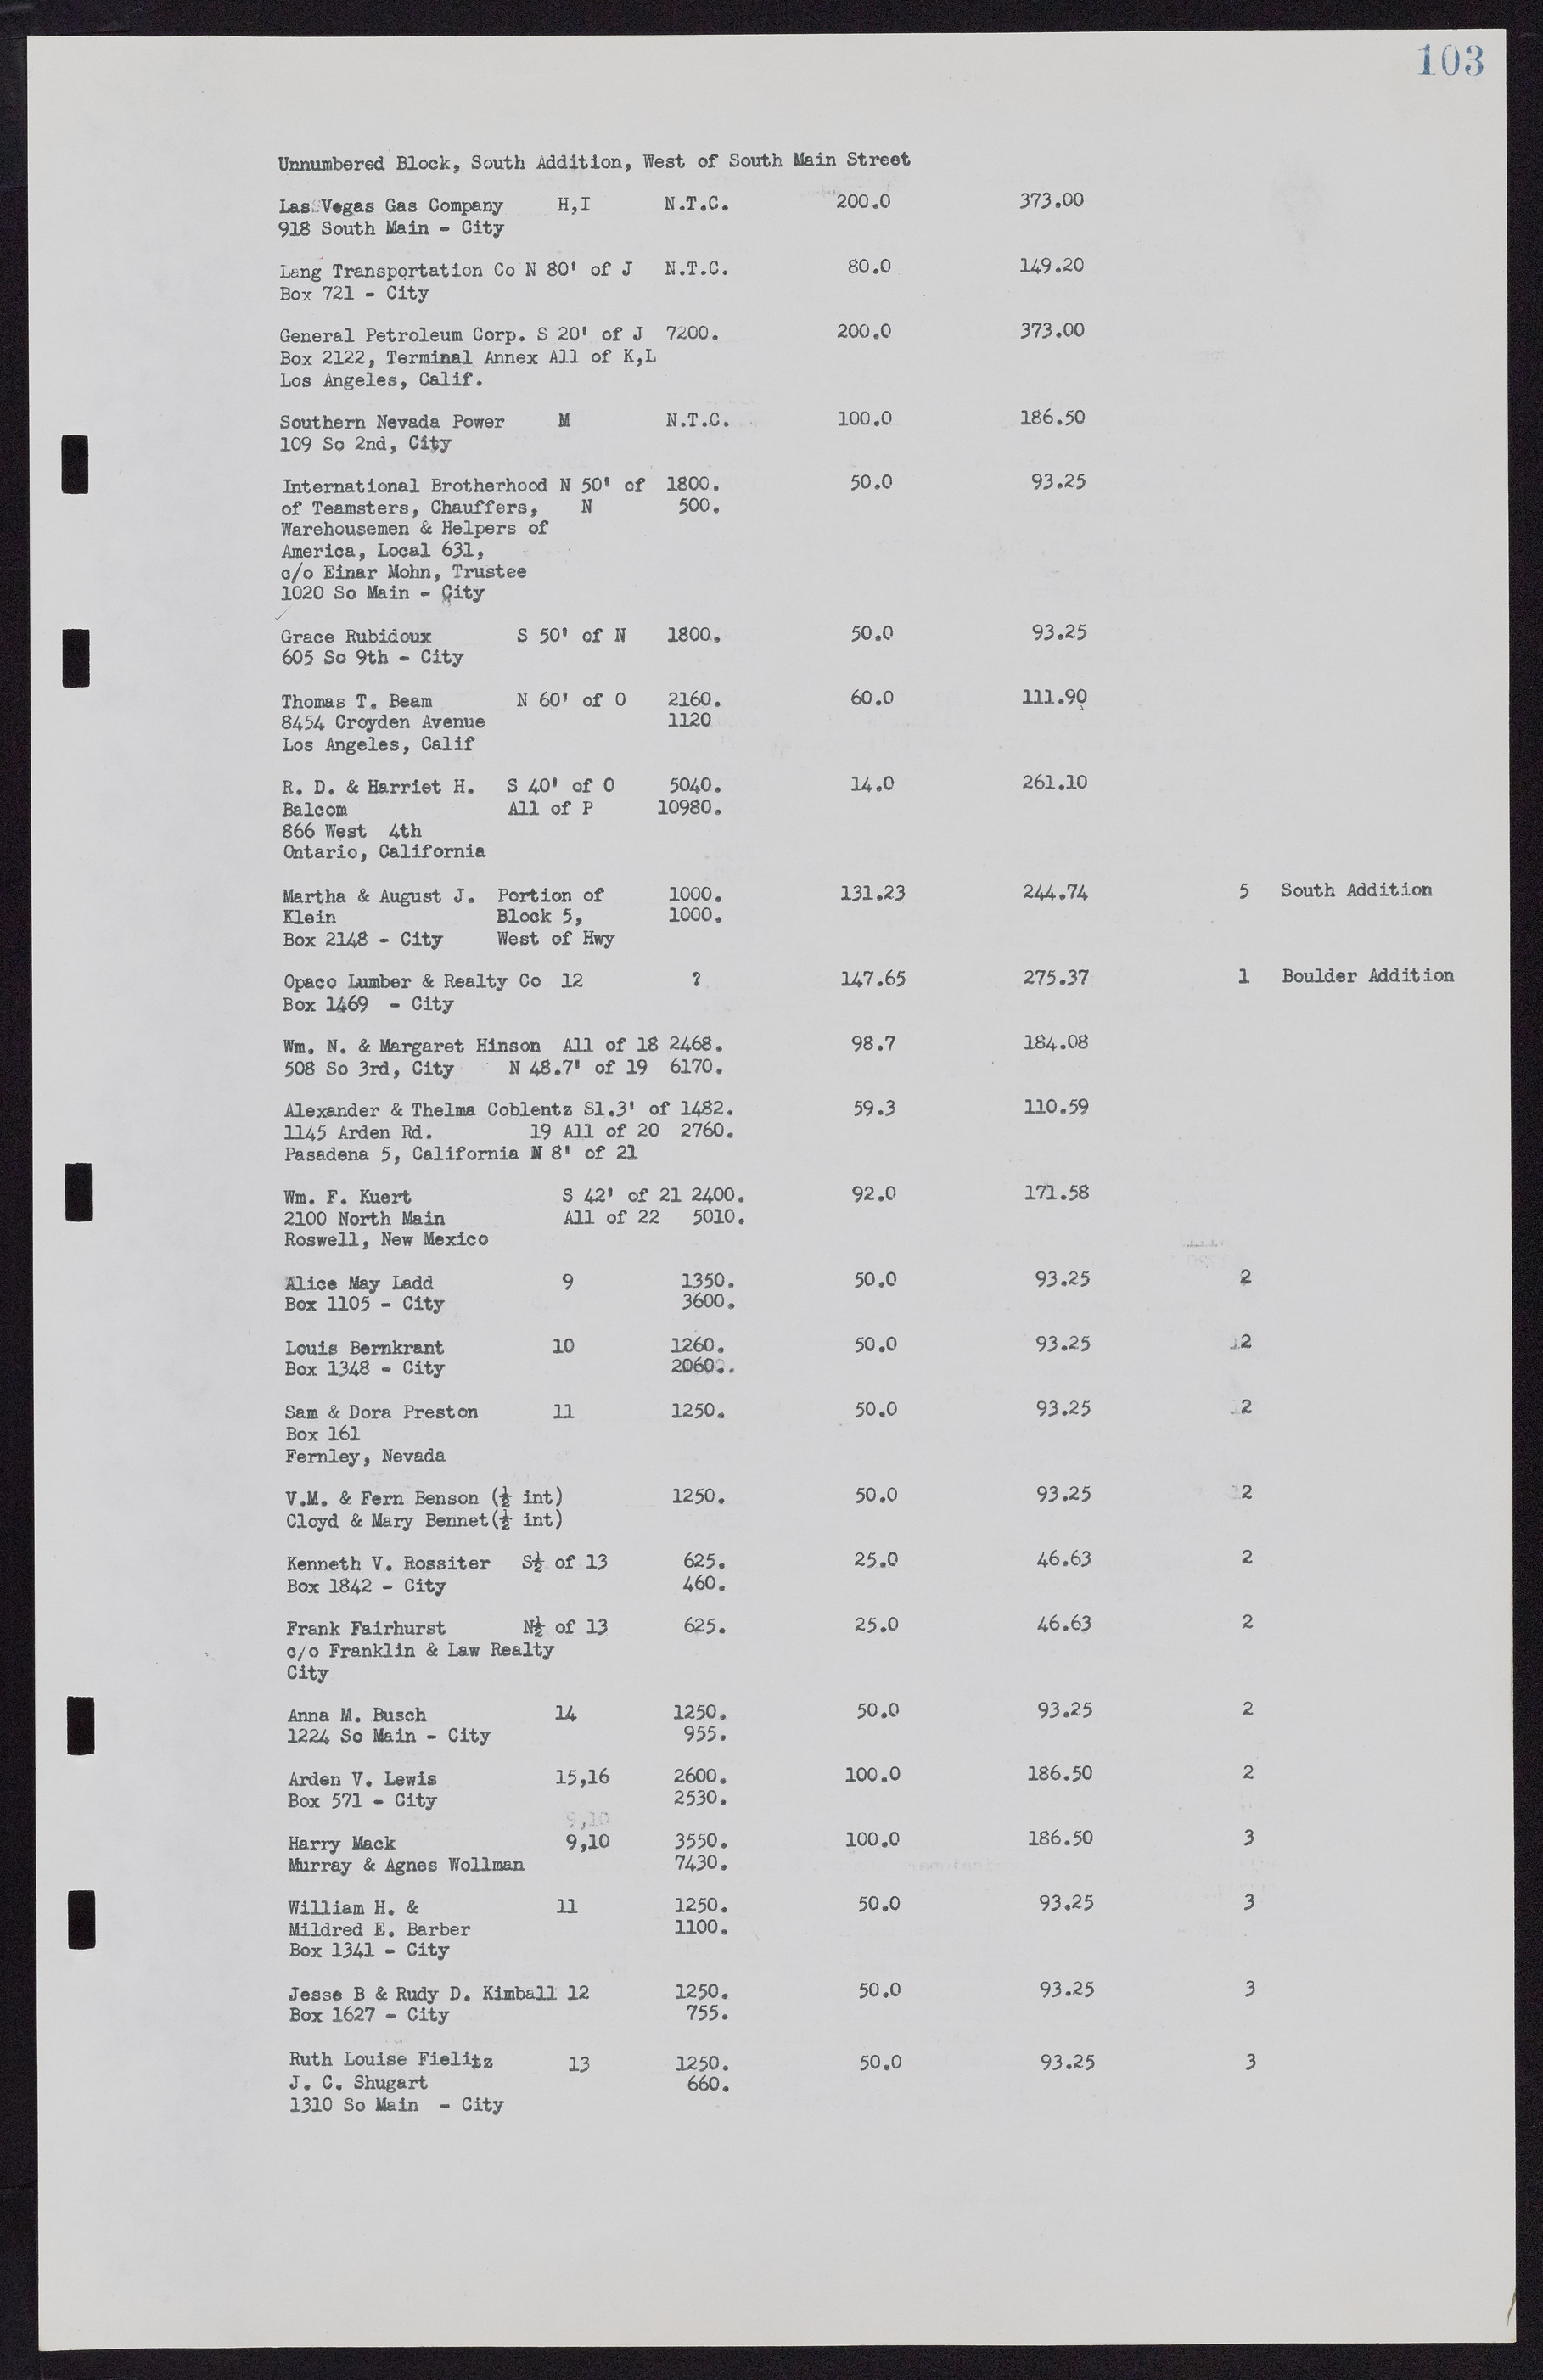 Las Vegas City Commission Minutes, November 7, 1949 to May 21, 1952, lvc000007-111